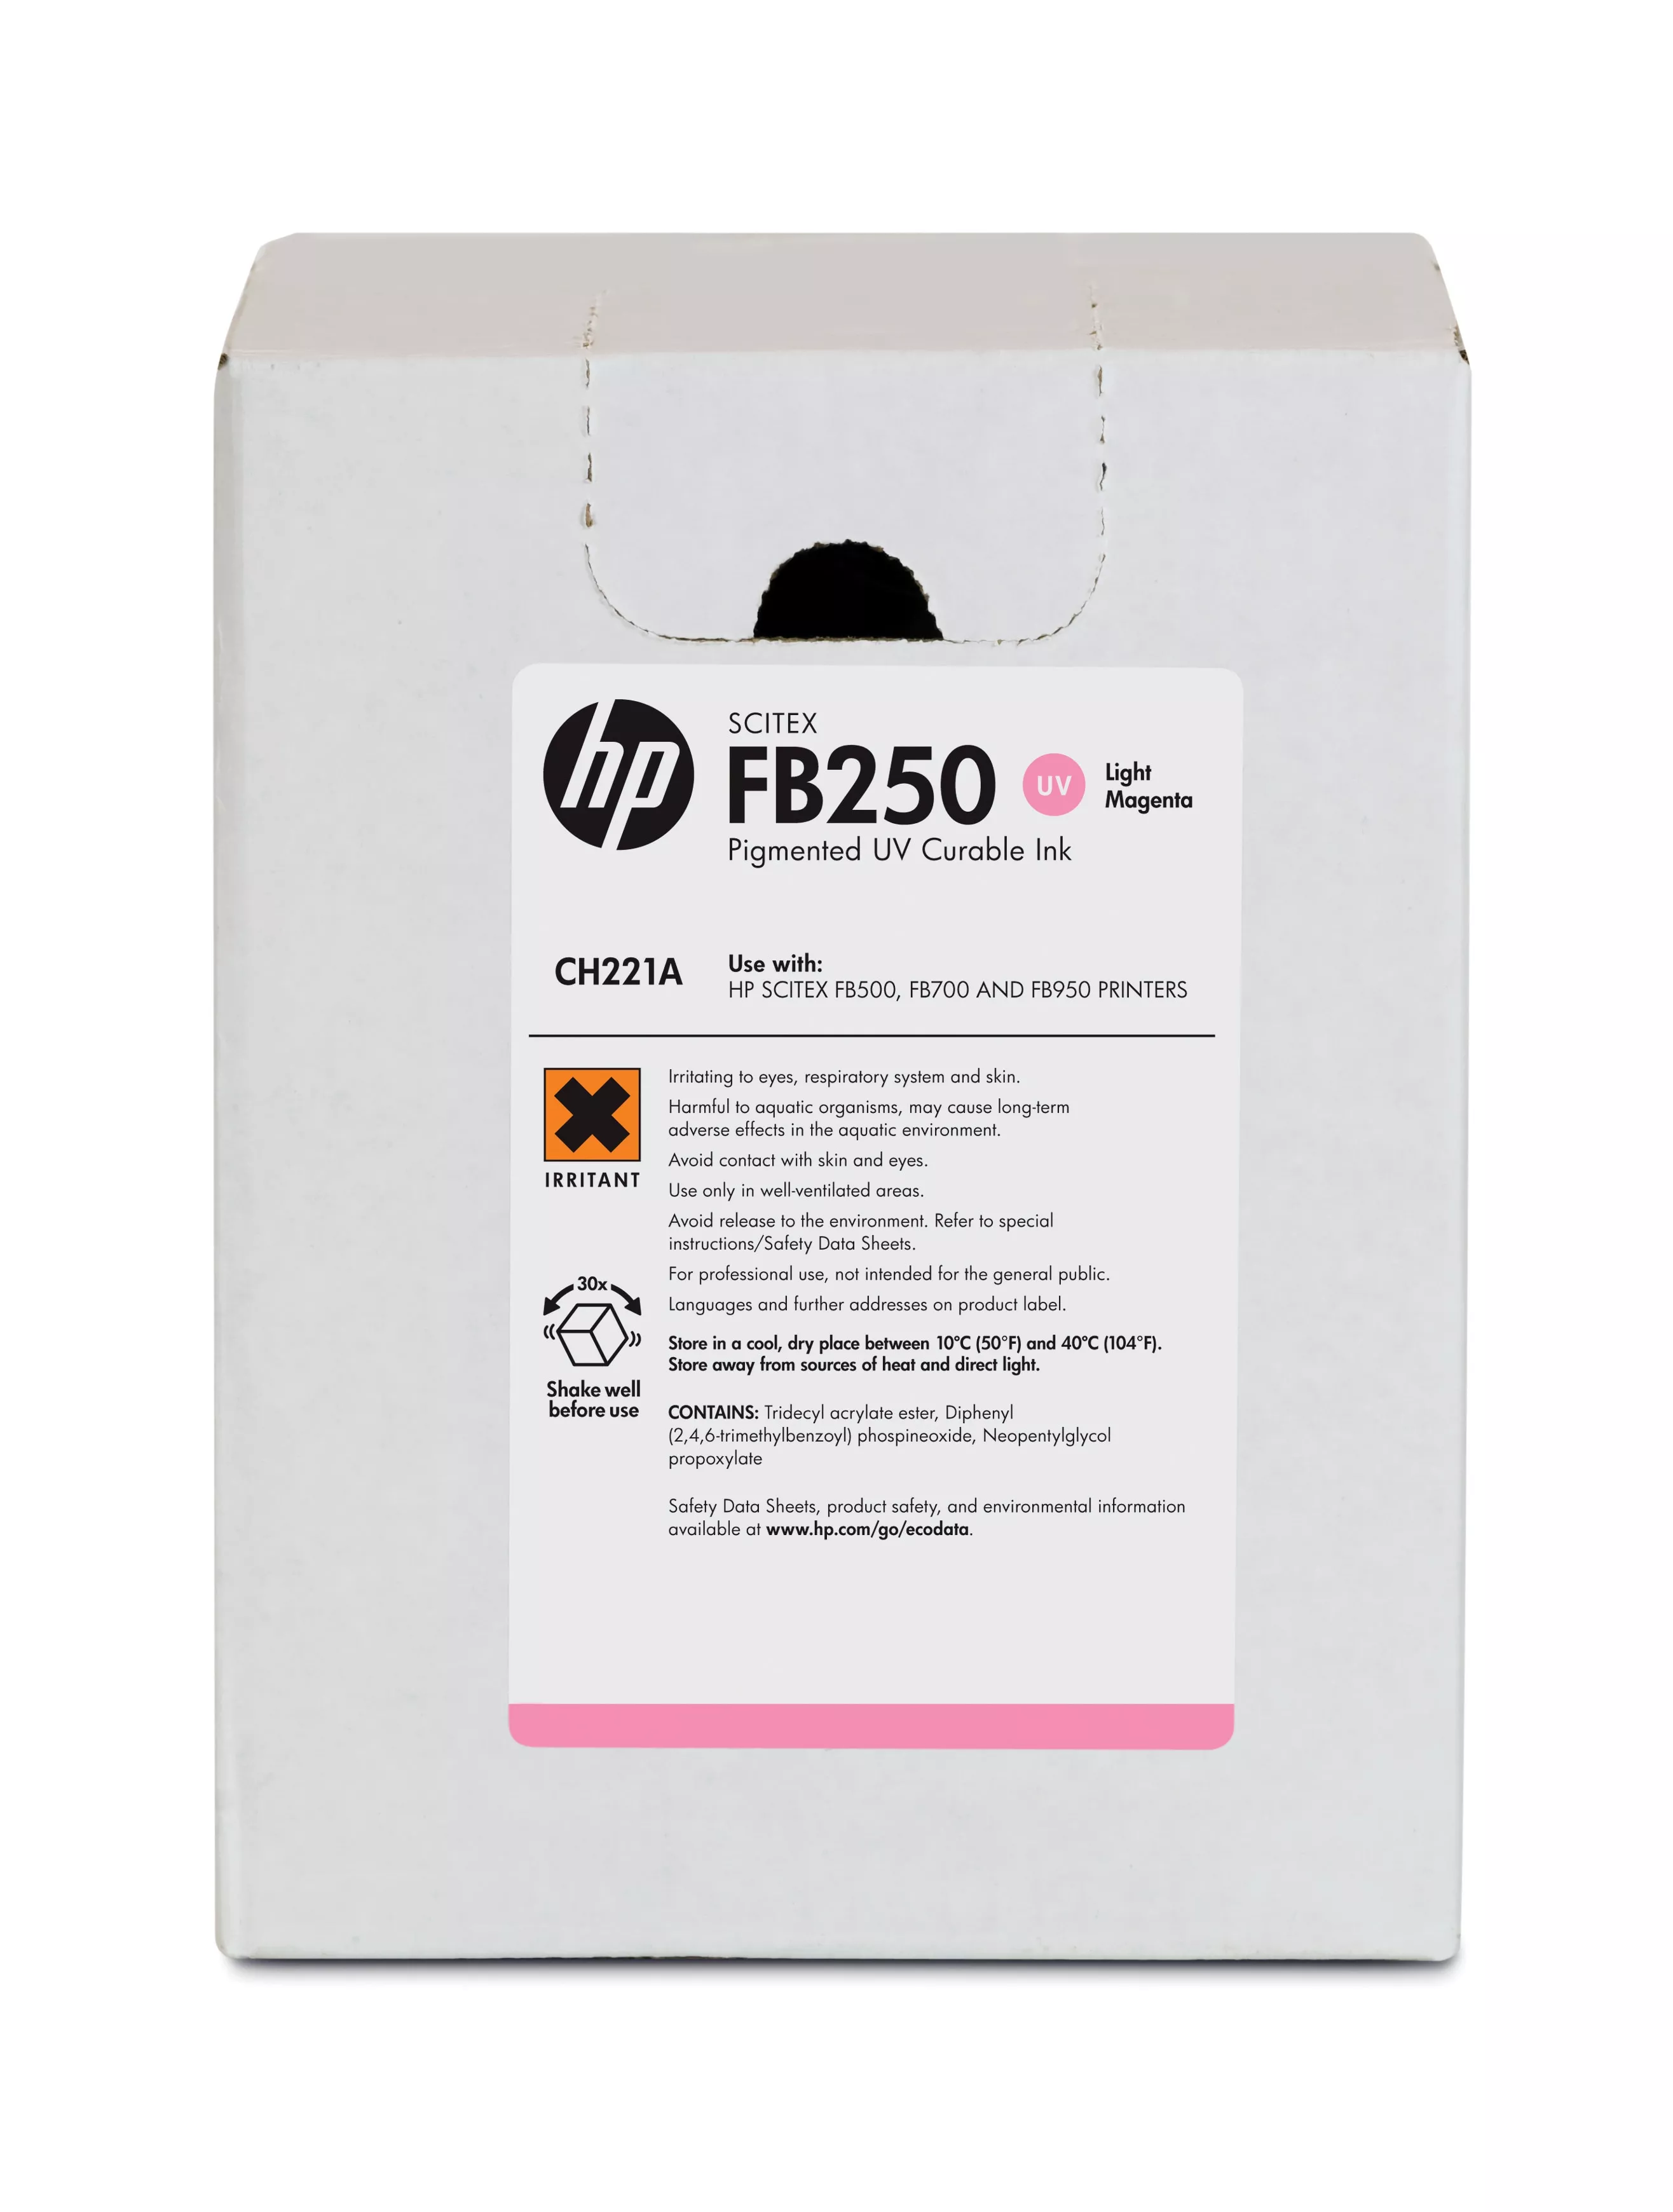 Vente HP FB250 encre Scitex magenta clair 3 litres au meilleur prix